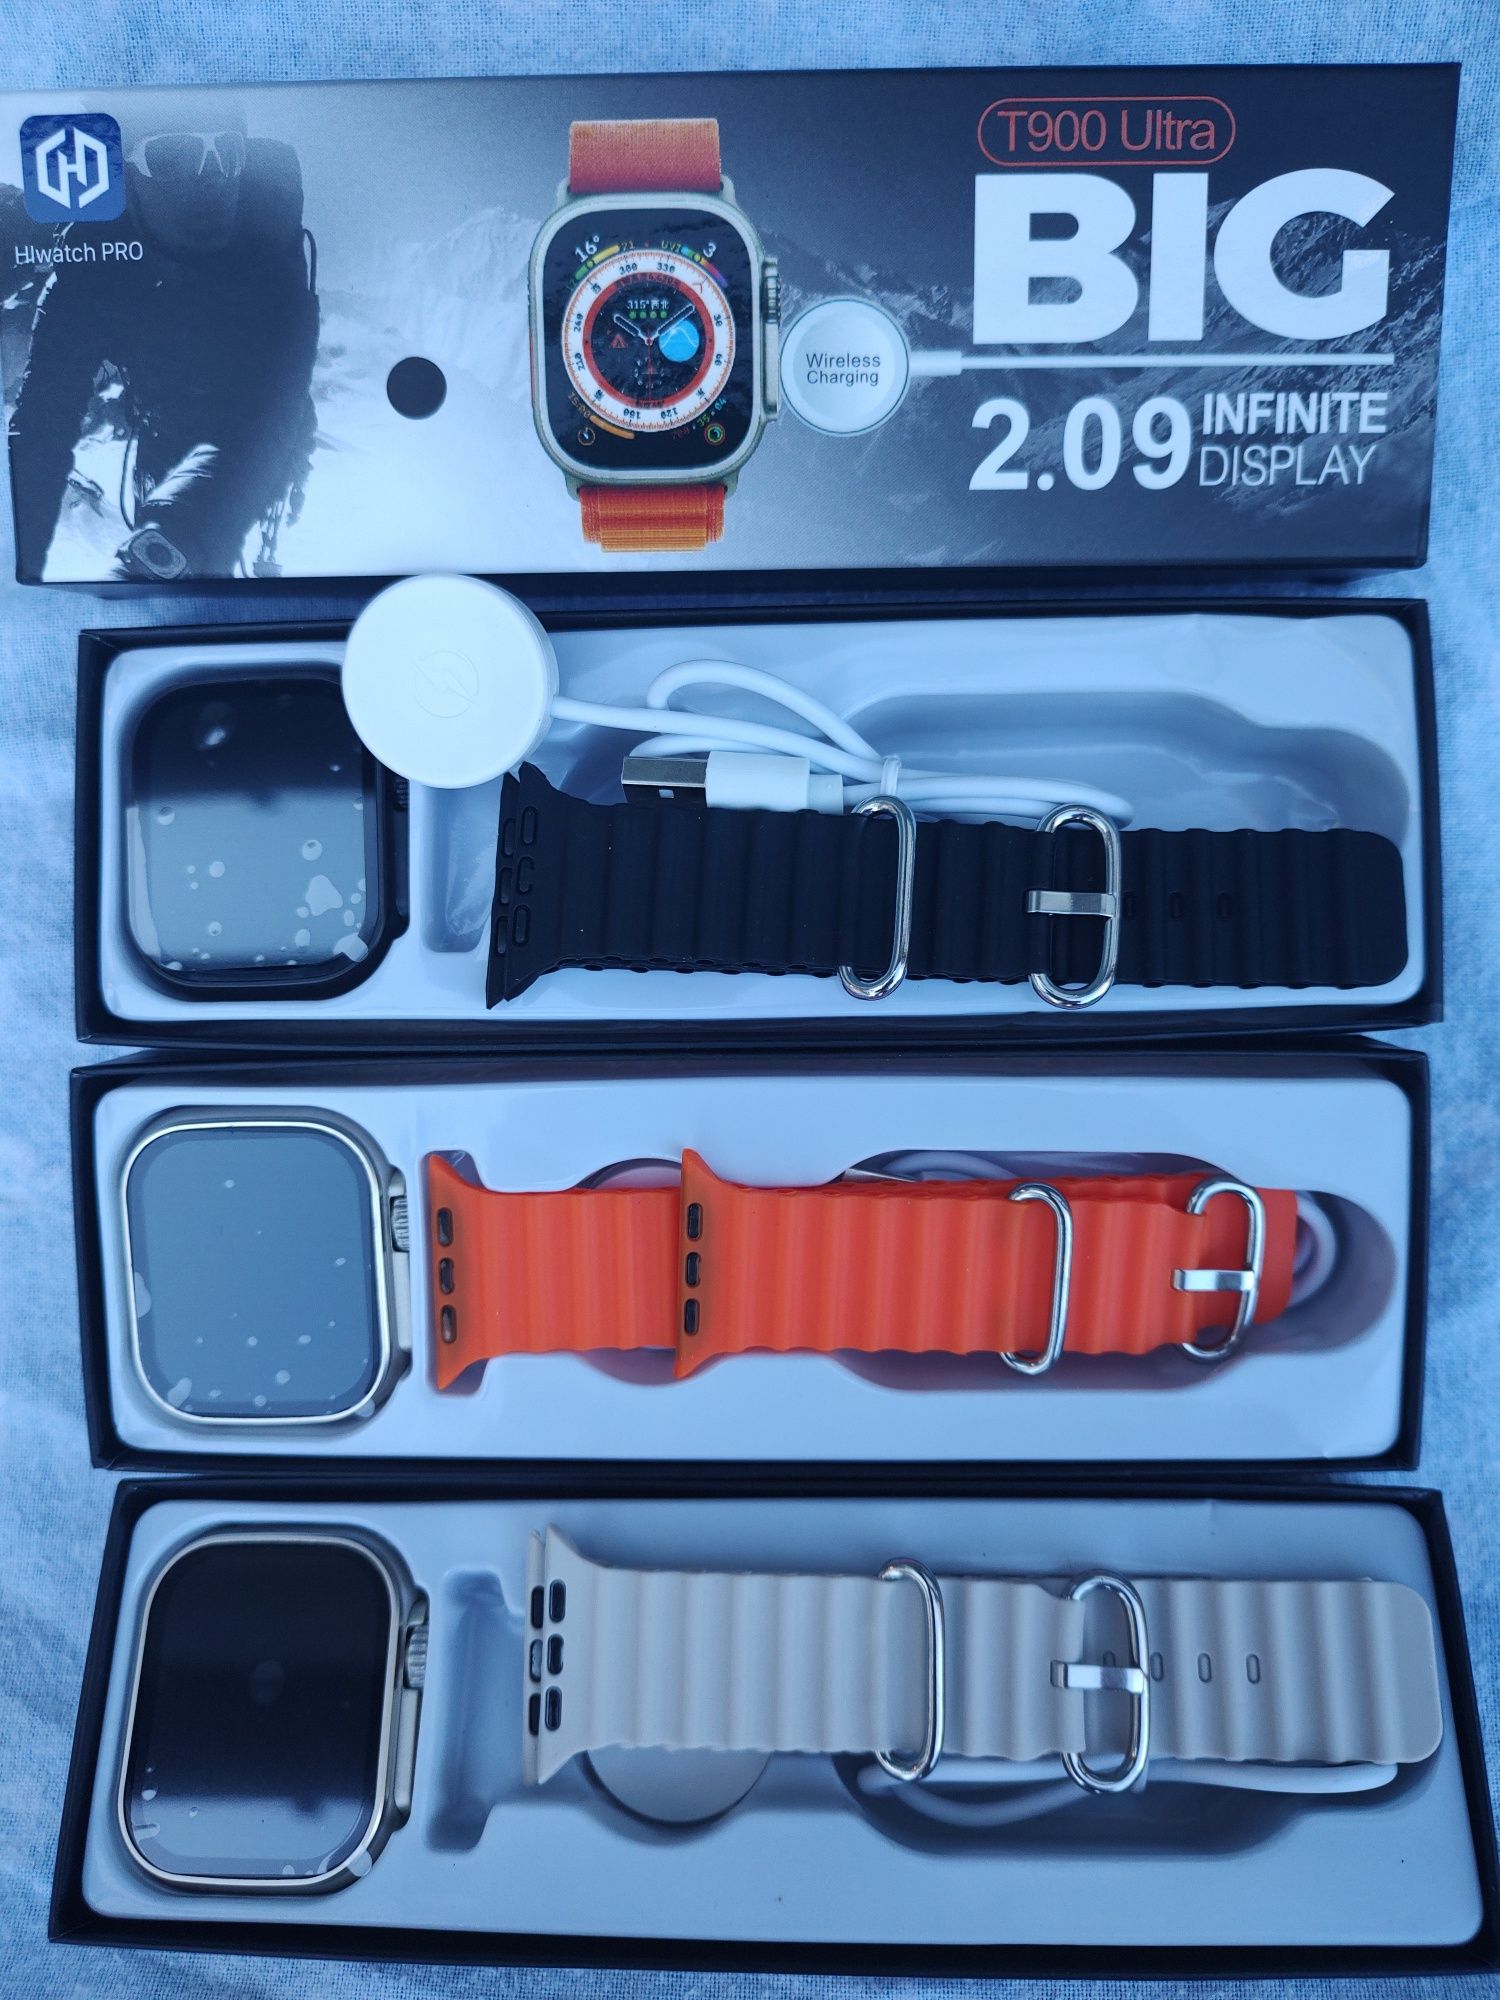 Smartwatch T900 ultra